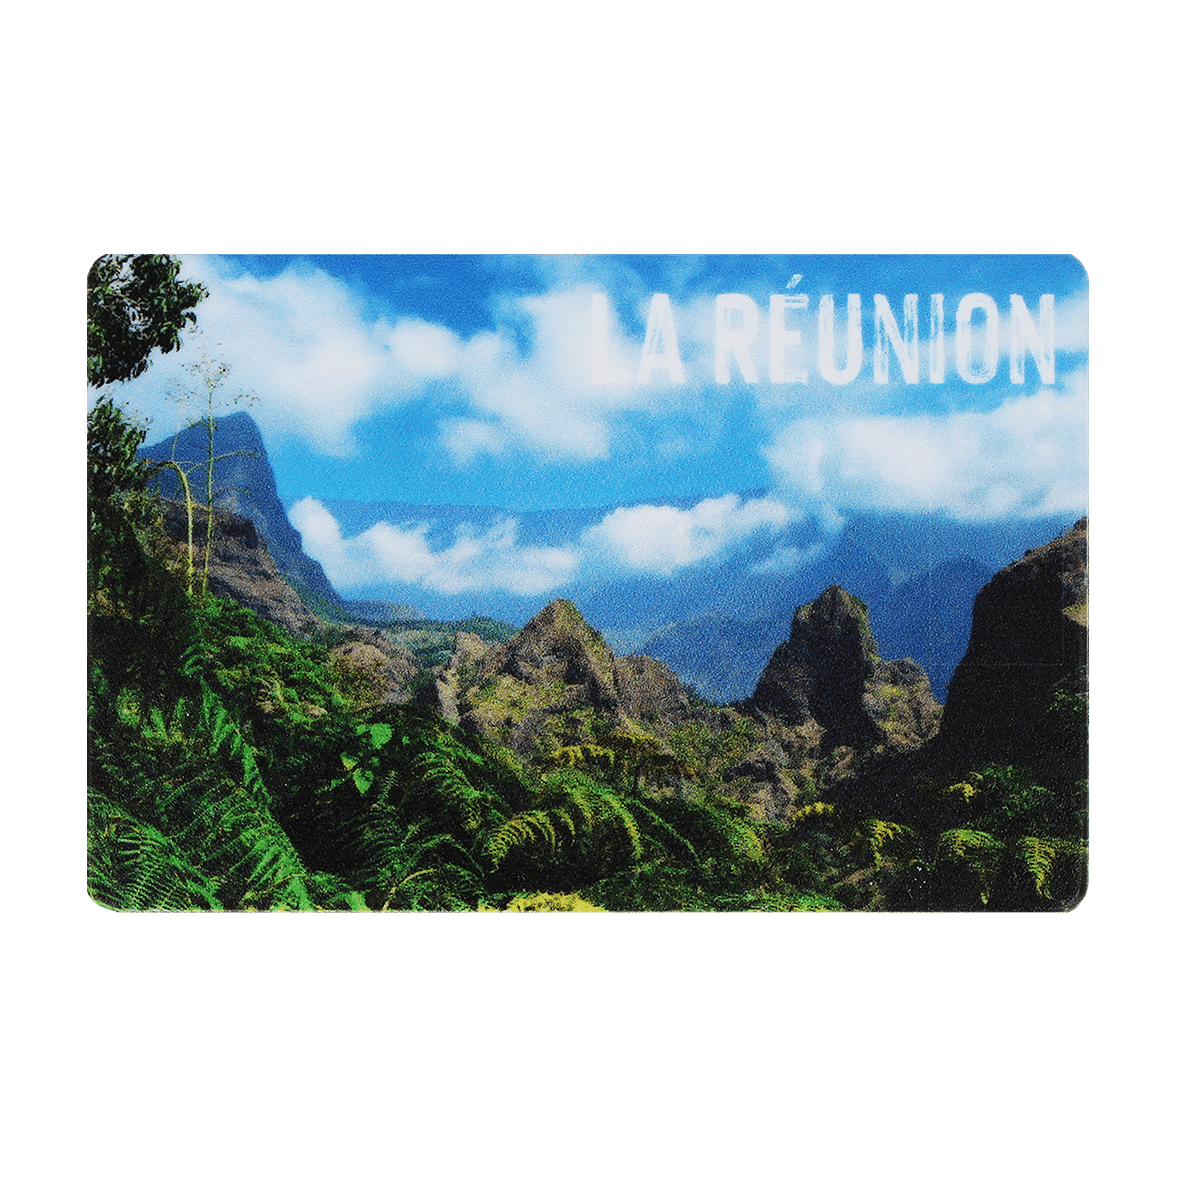 Color pop® Etui Rigide 1 Carte La Réunion - Fabrication française Imprimé Volcan 6 x 9 cm 